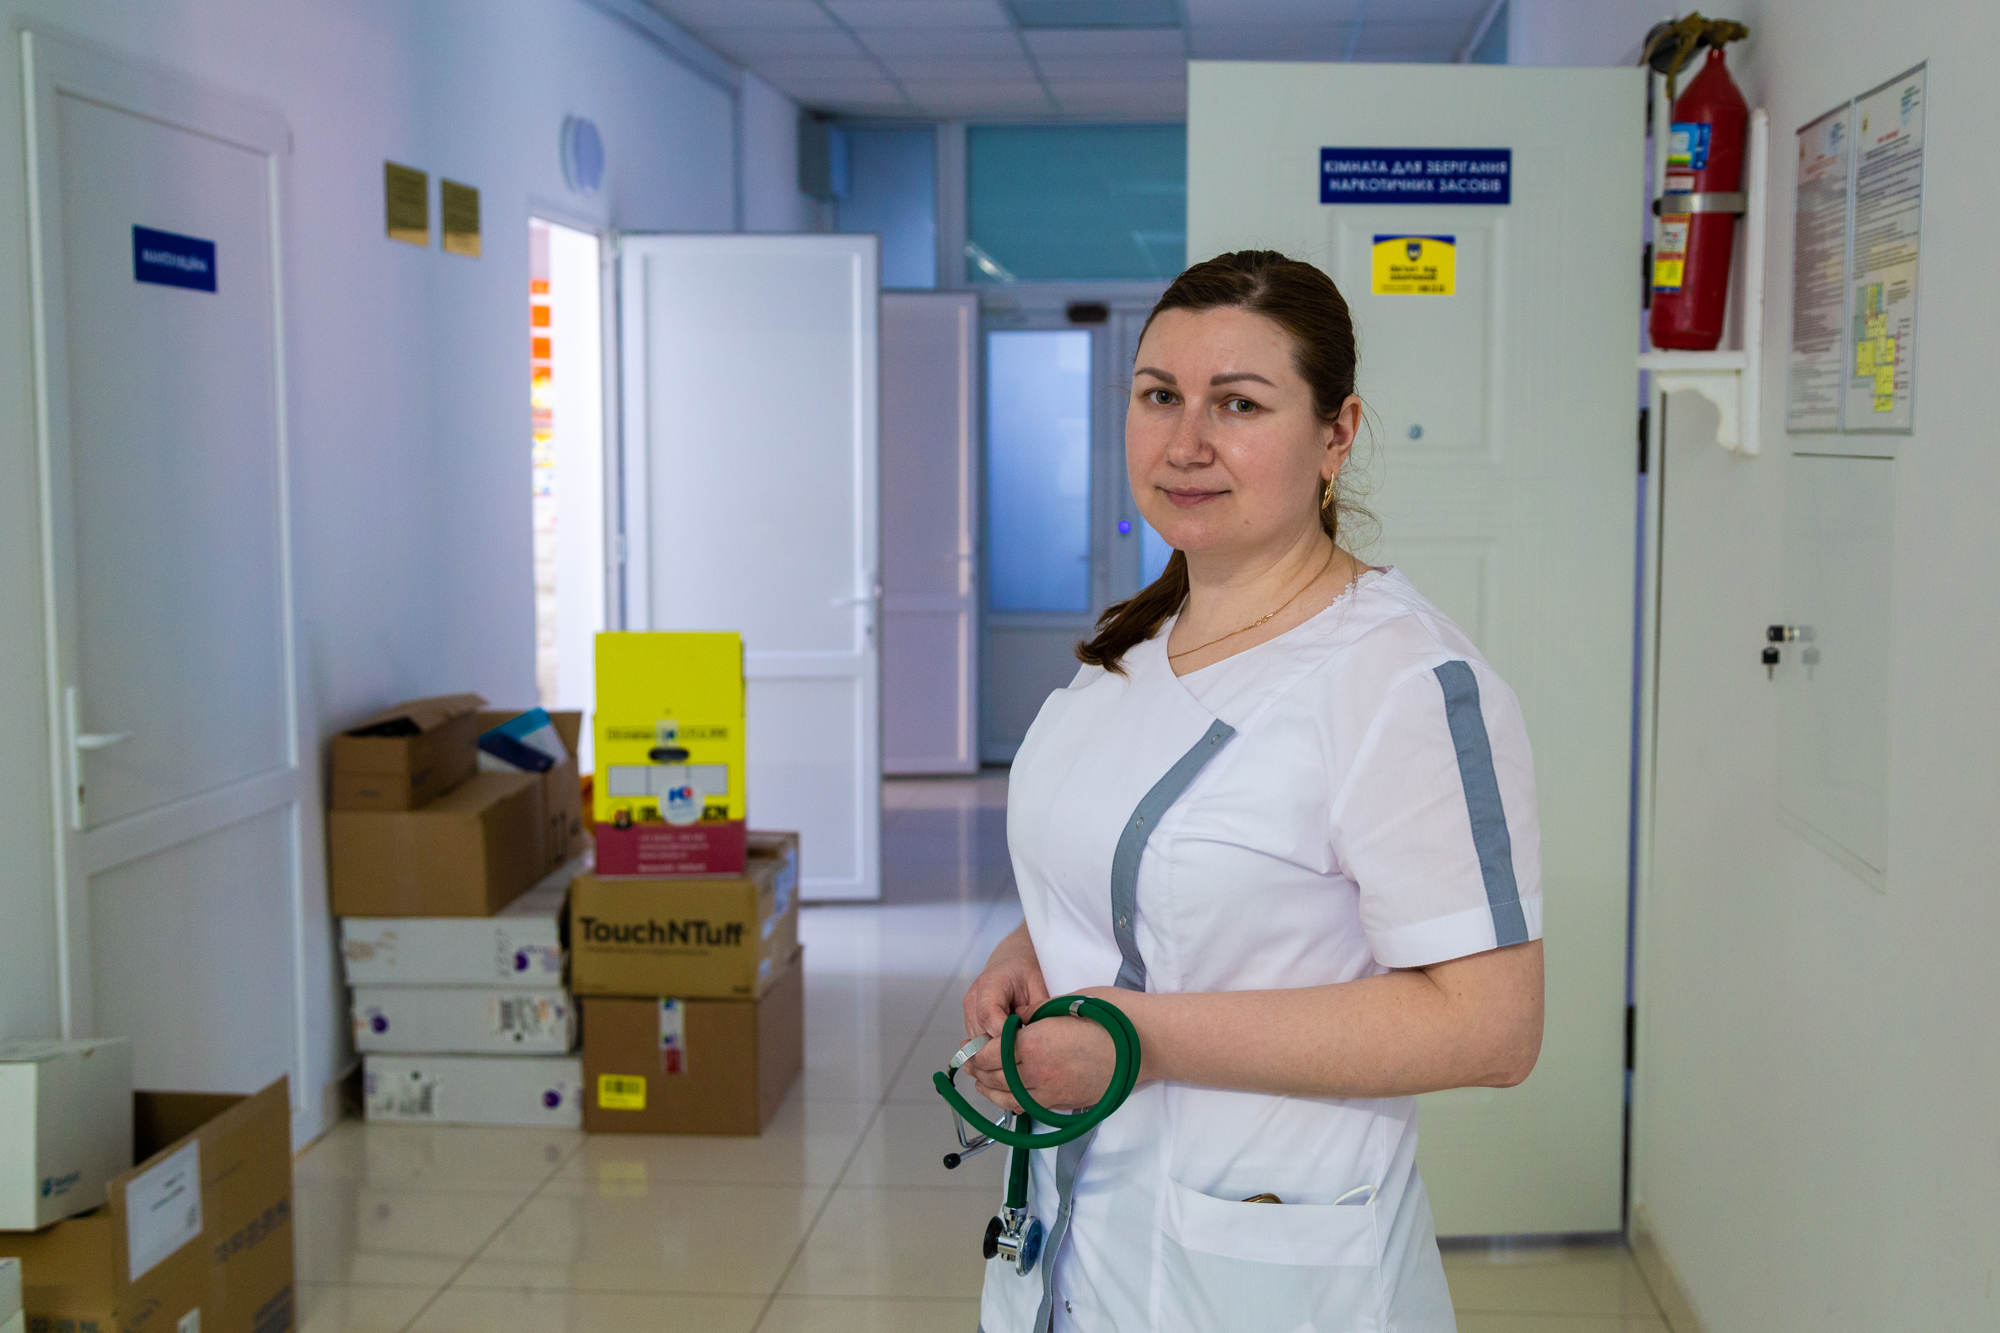 “In Kyiv, doctors’ shifts last weeks rather than days”, Oksana Sirenko, 37, Kyiv